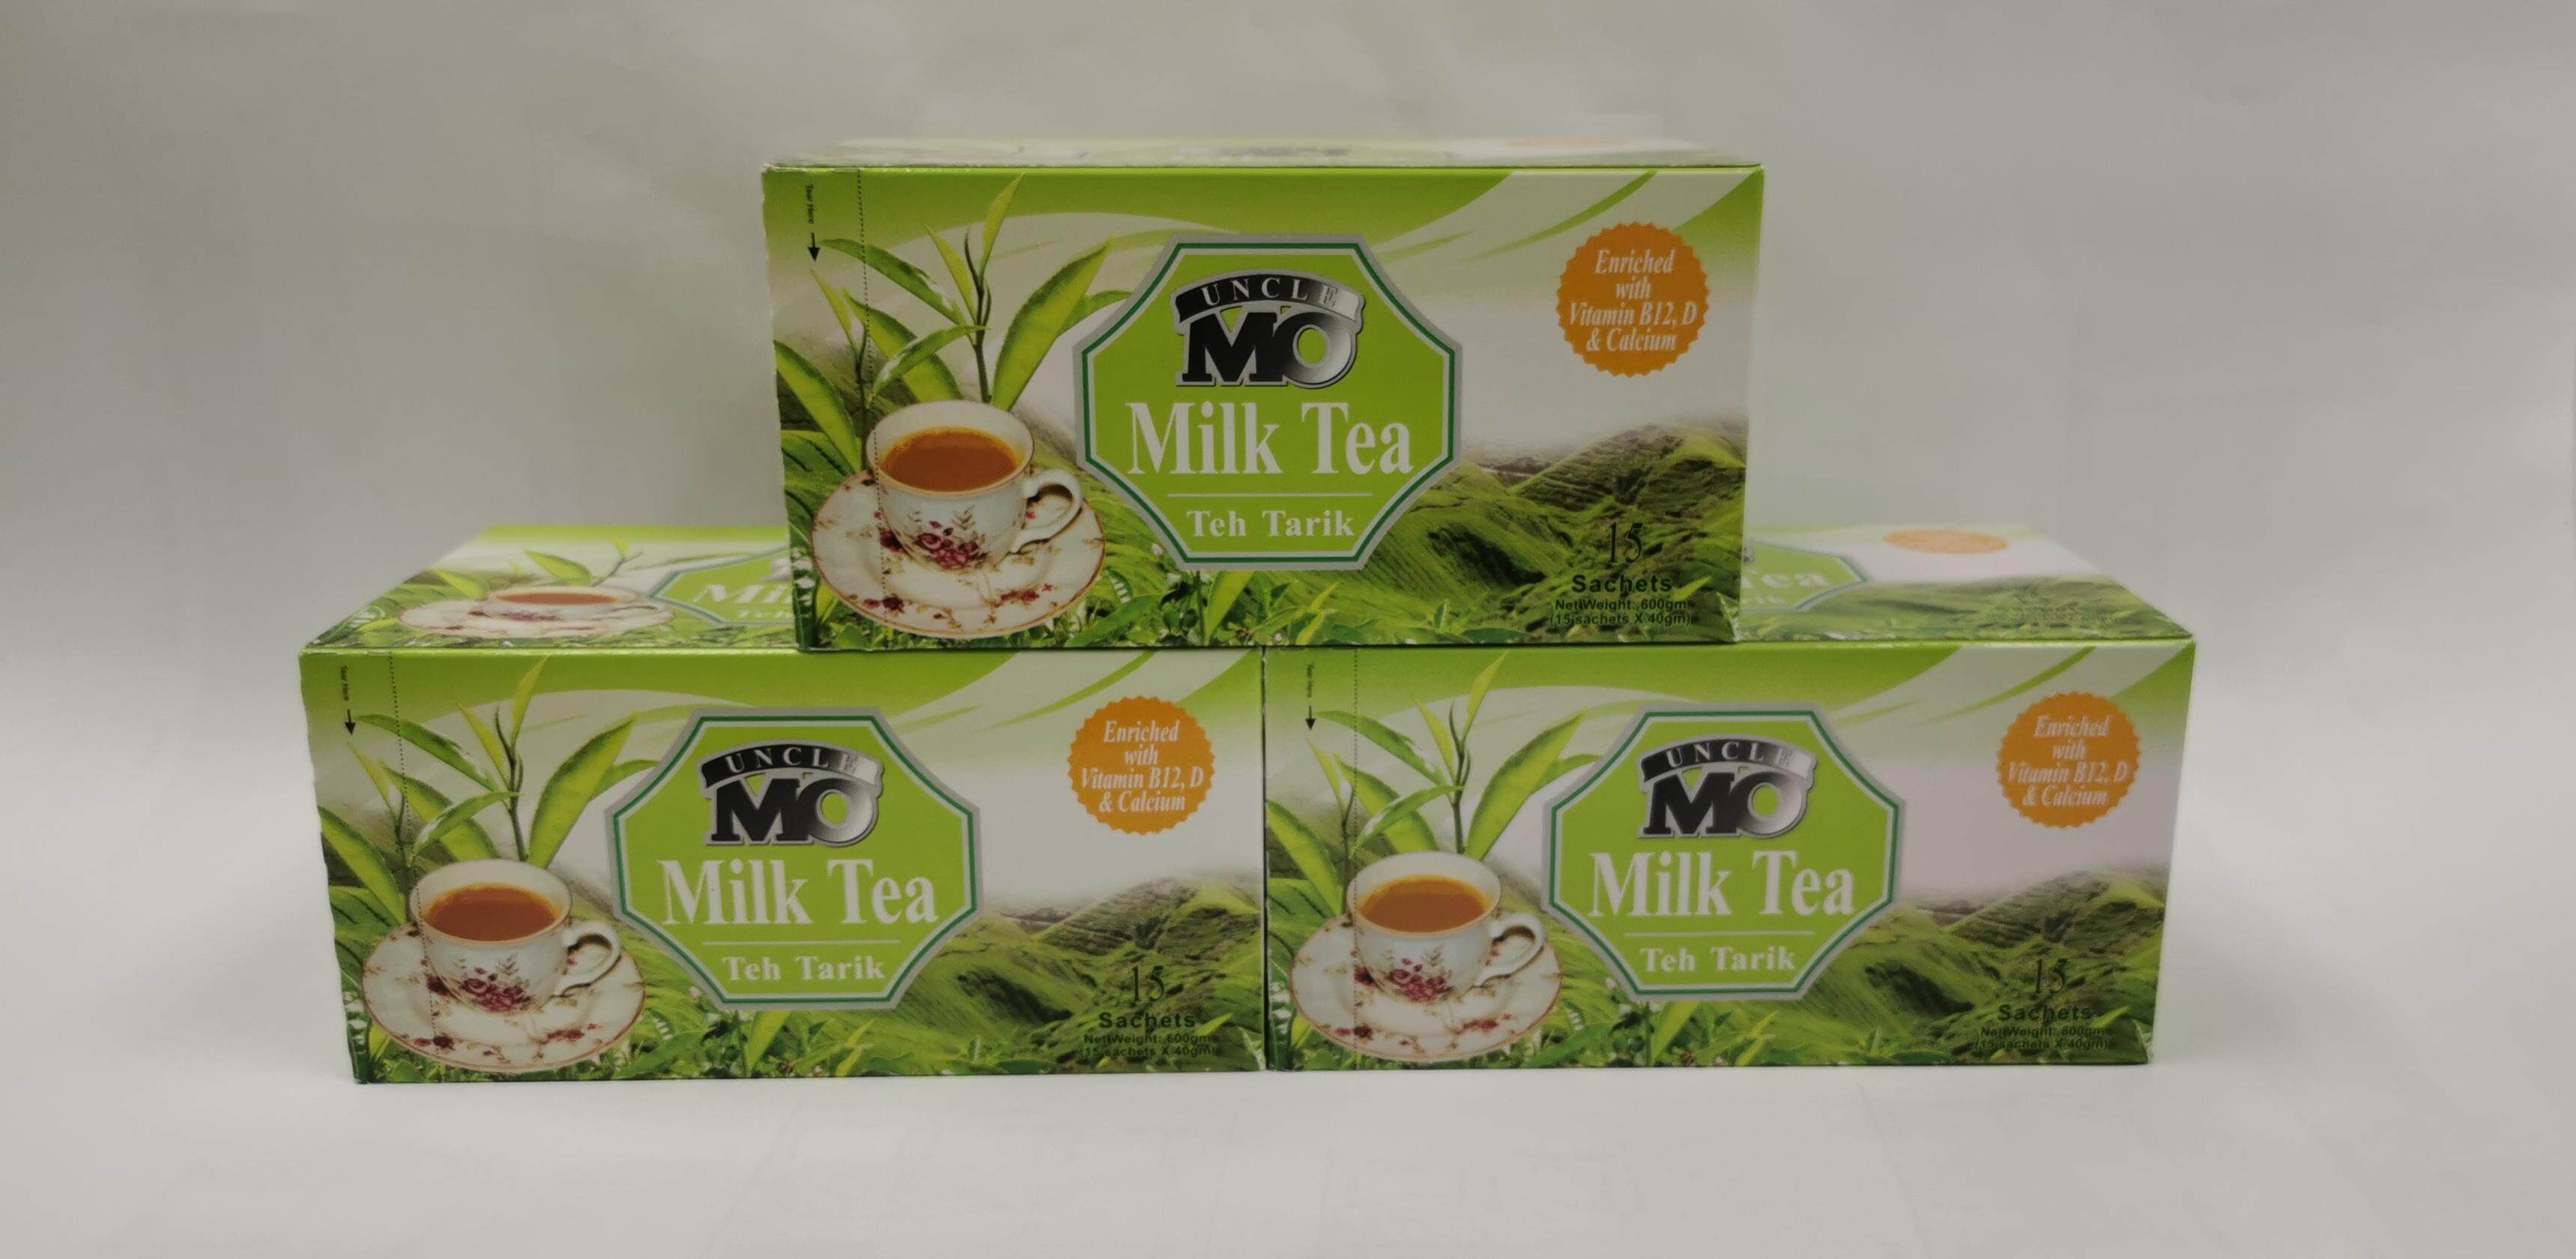 Tea milk mo mo Mo Mo